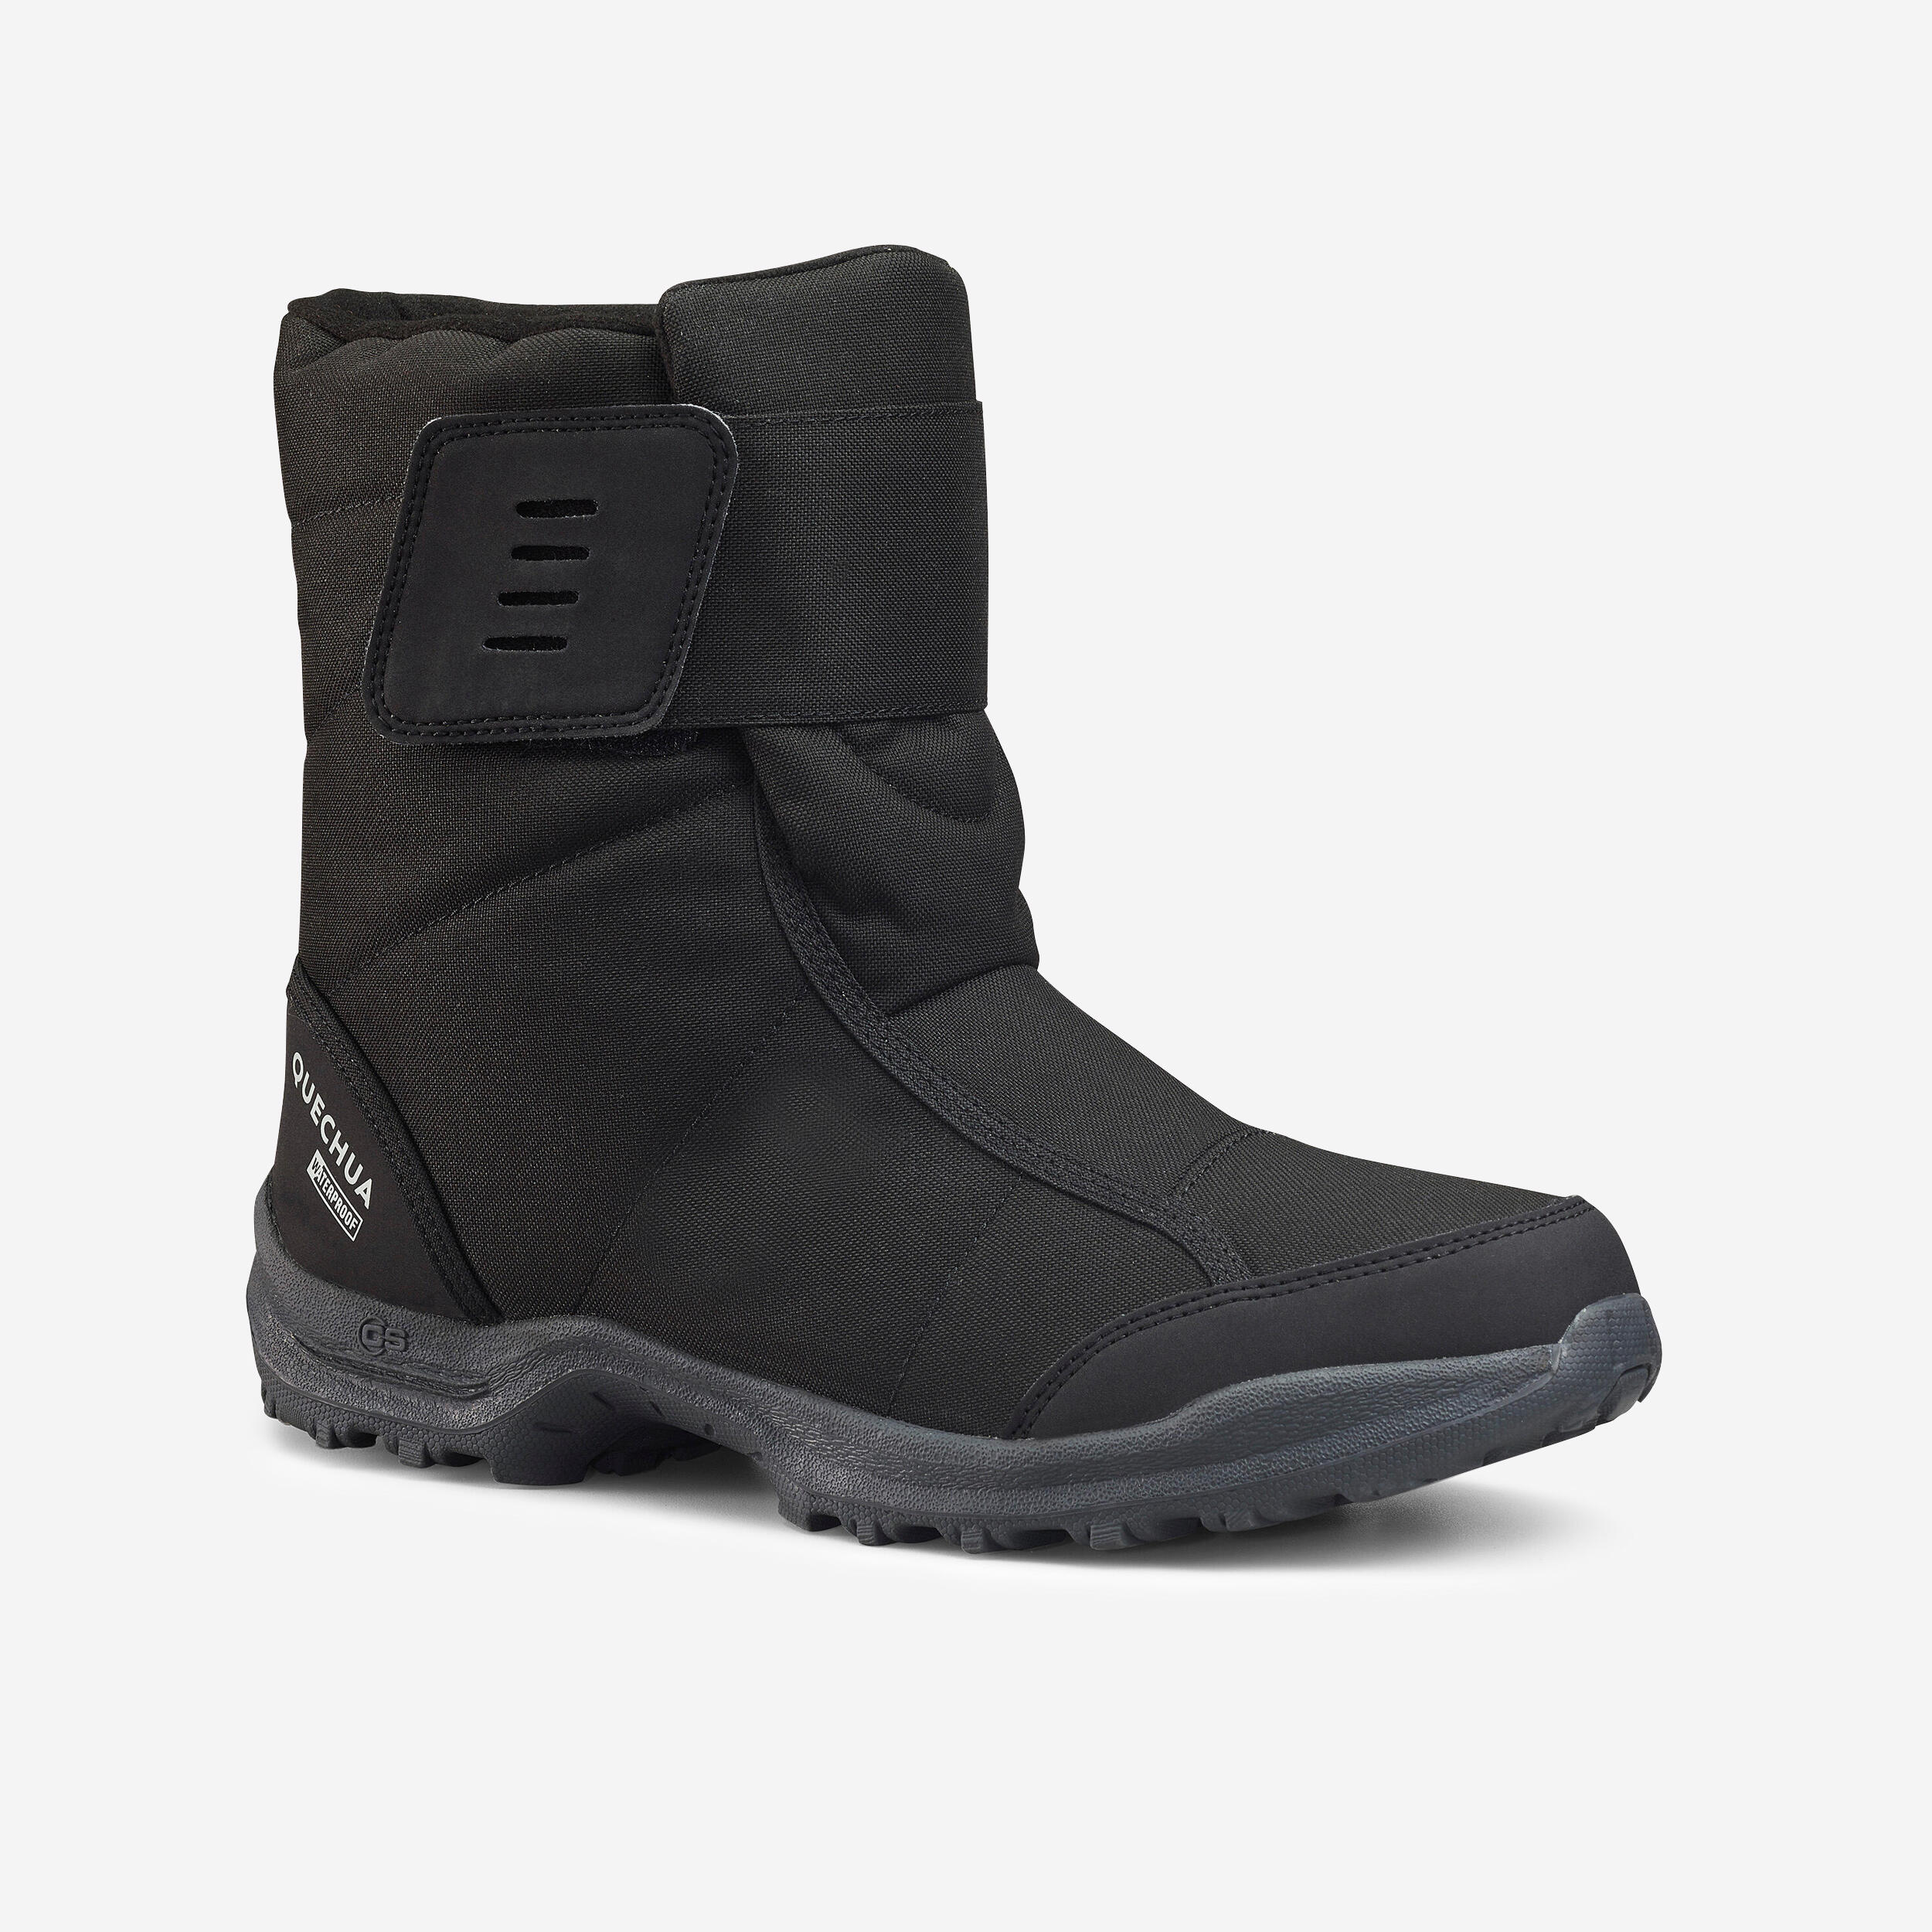 QUECHUA Men’s Warm Waterproof Snow Boots - SH100 hook and loop strap